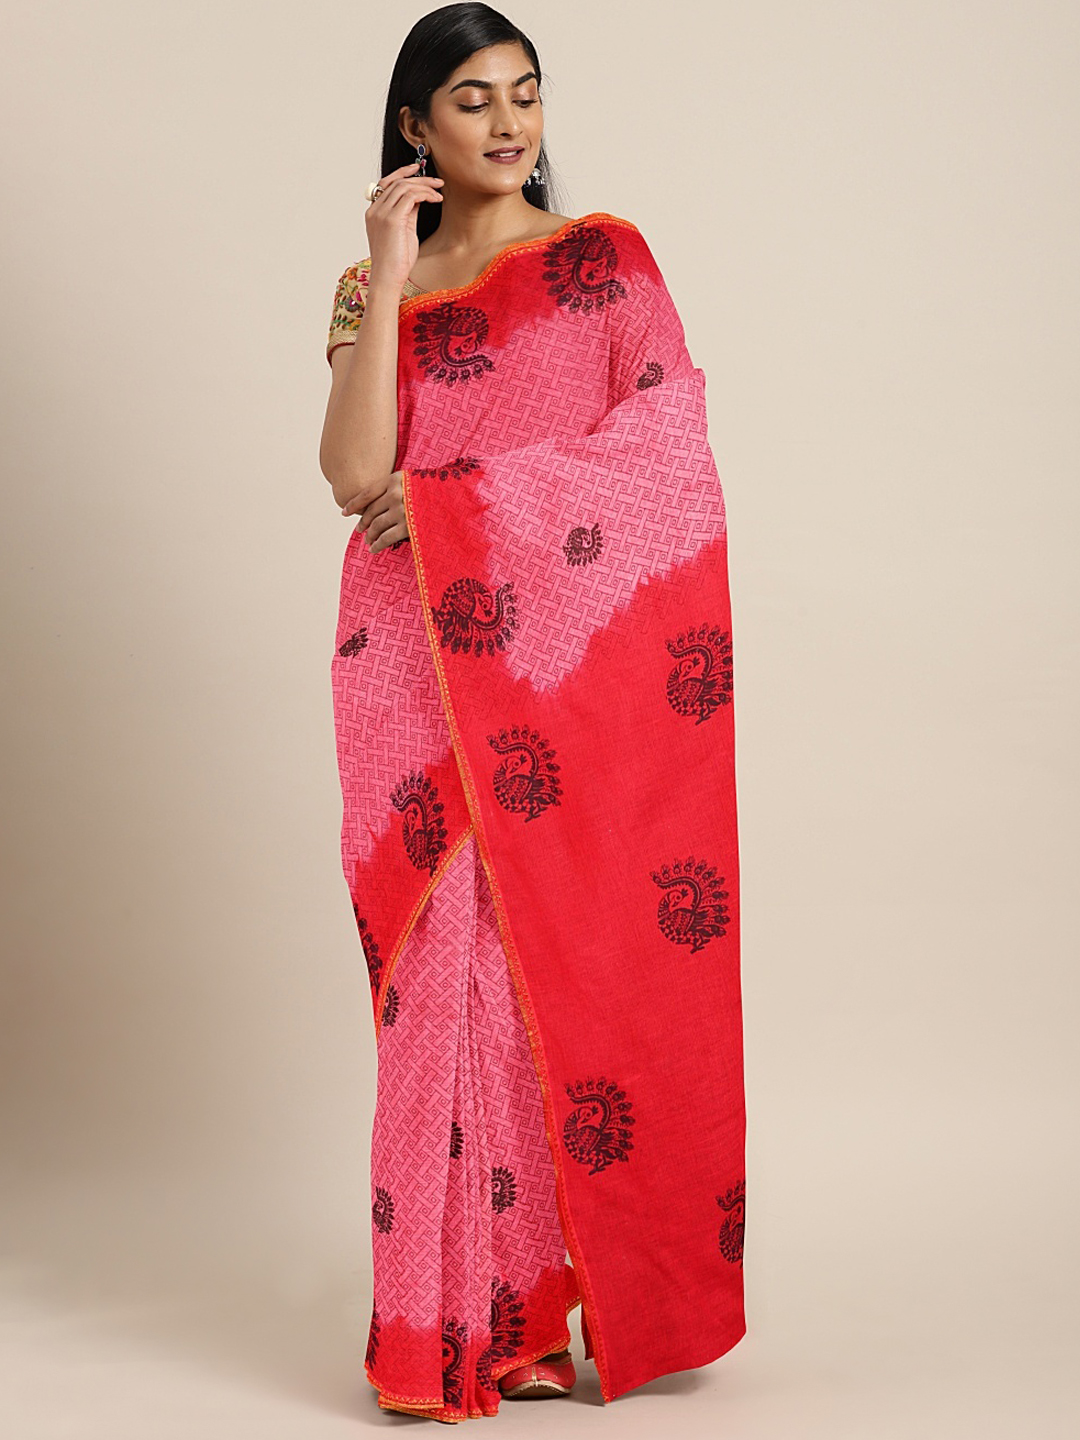 The Chennai Silks Classicate Red Printed Pure Cotton Saree Price in India